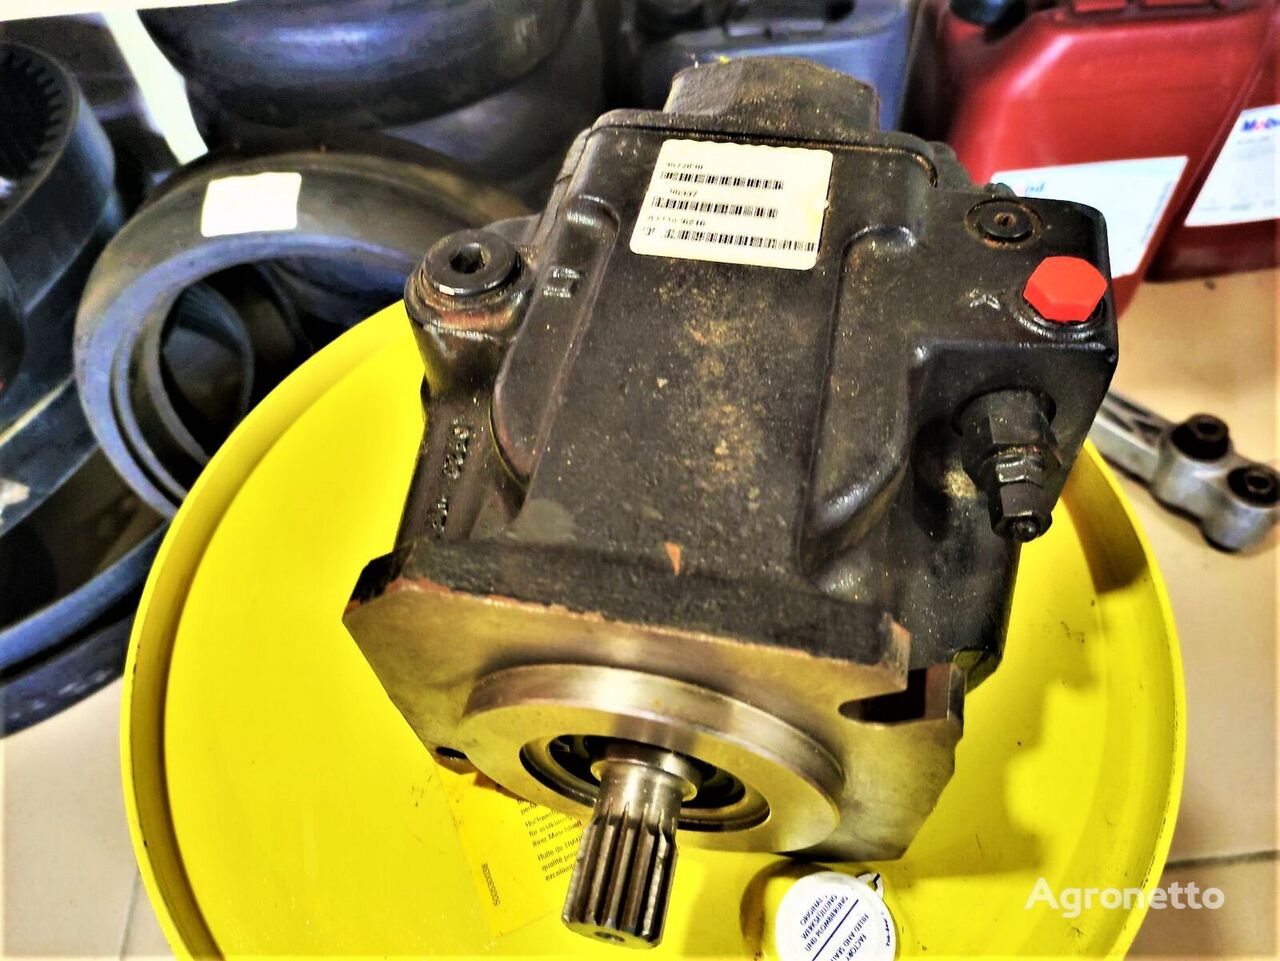 John Deere RE65337 hydraulic pump for John Deere wheel tractor